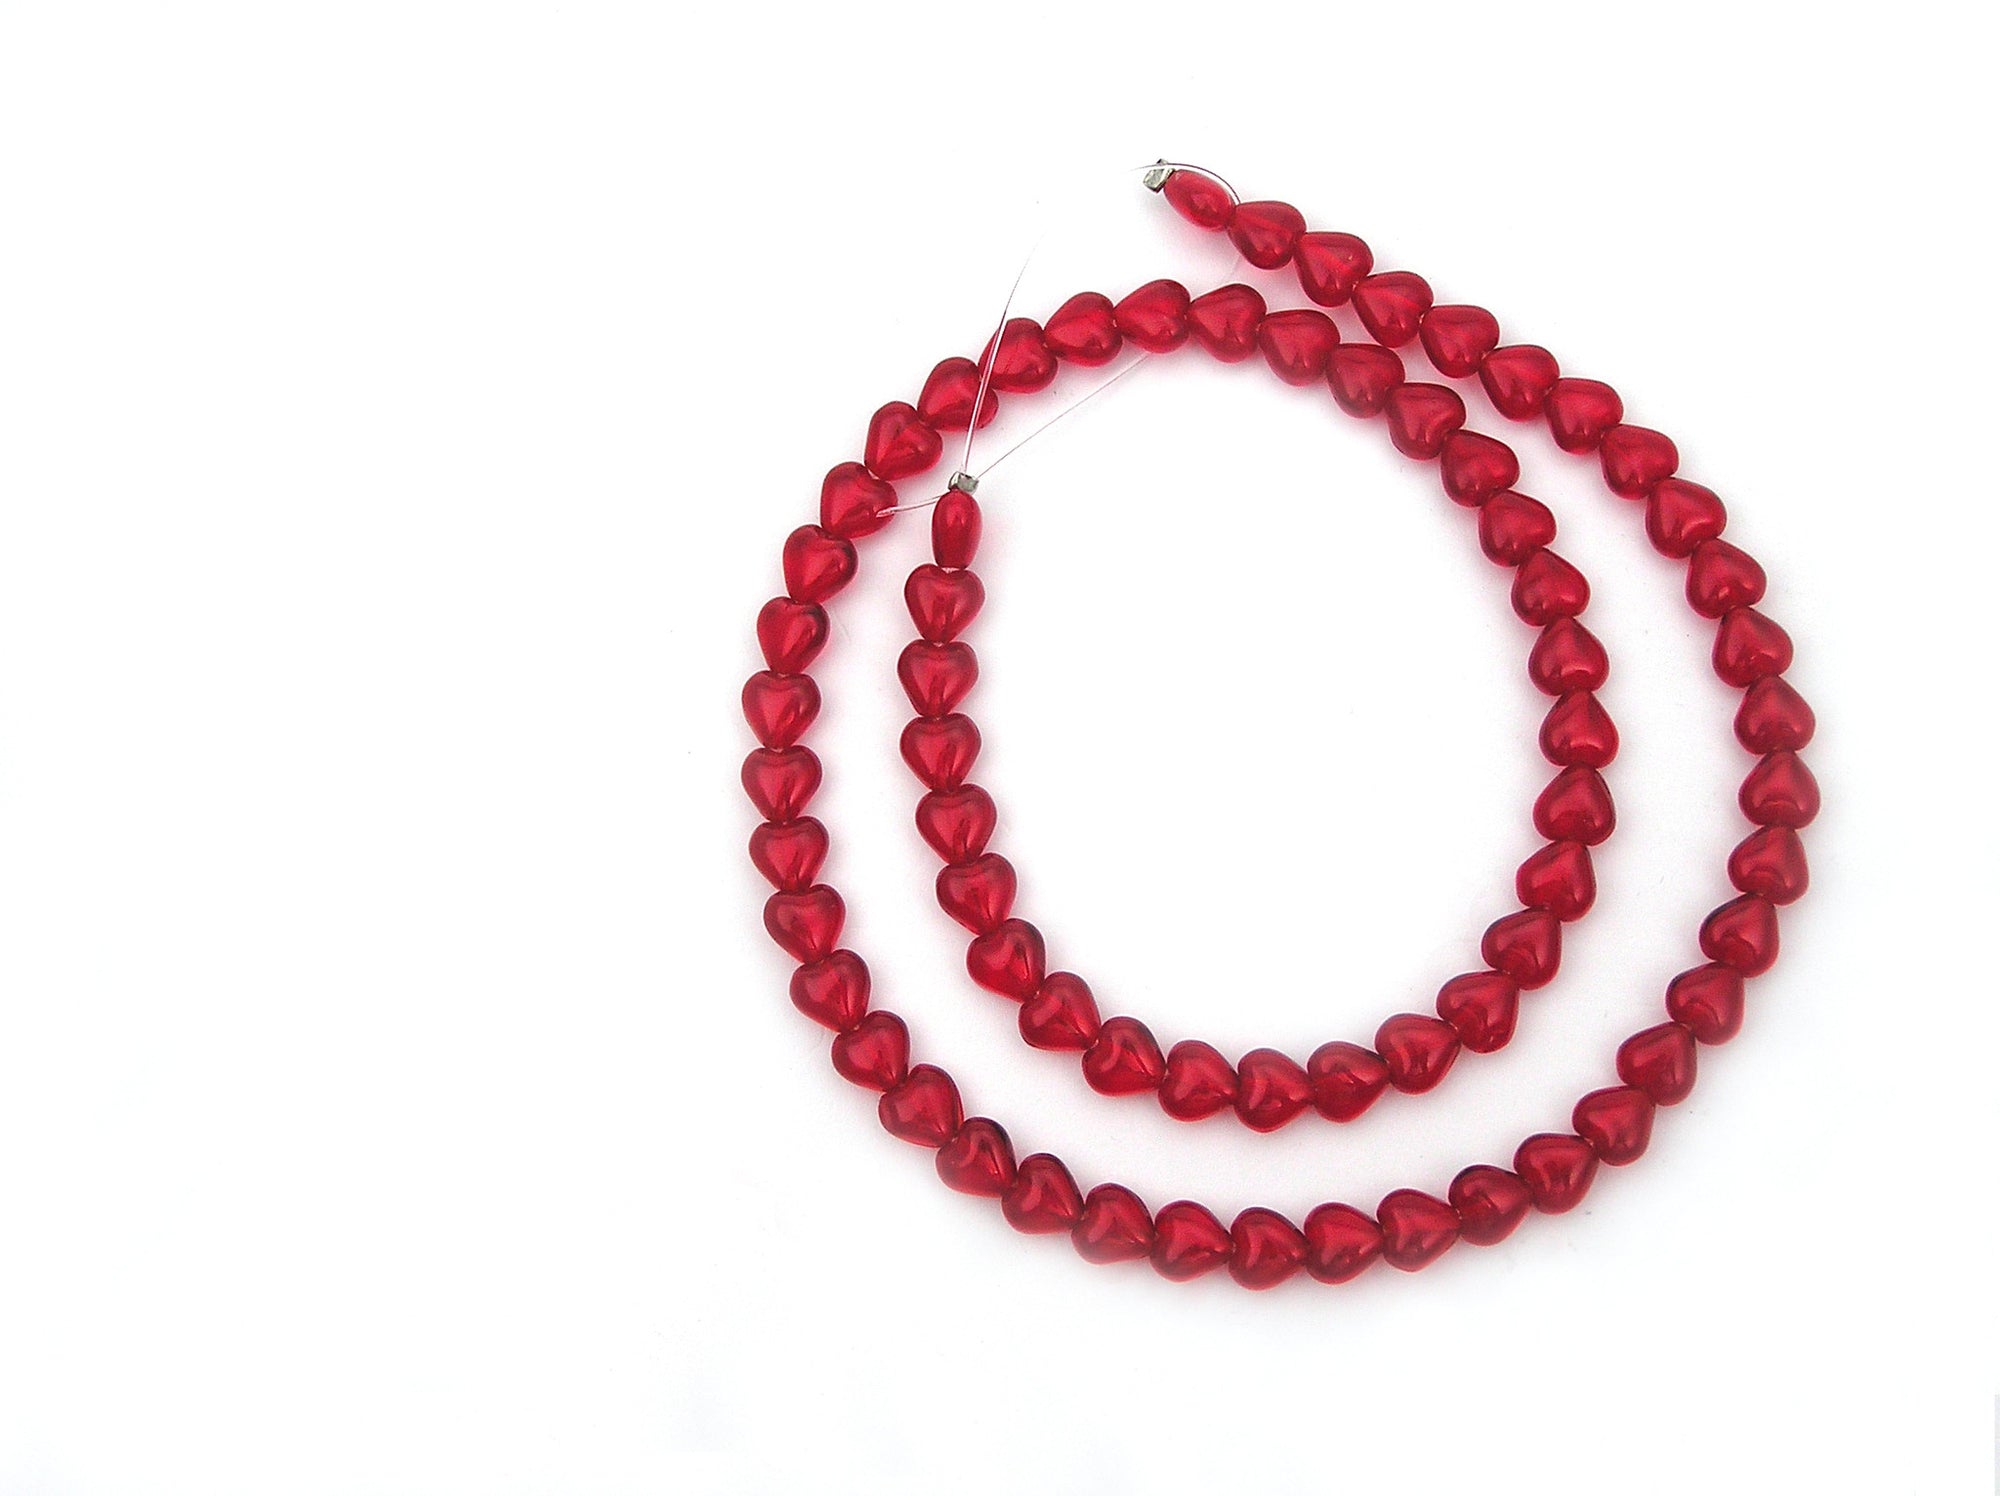 Czech glass Heart shaped druk beads 6x6mm Light Siam color, light red, Loose Pressed Beads, 50 pcs J073